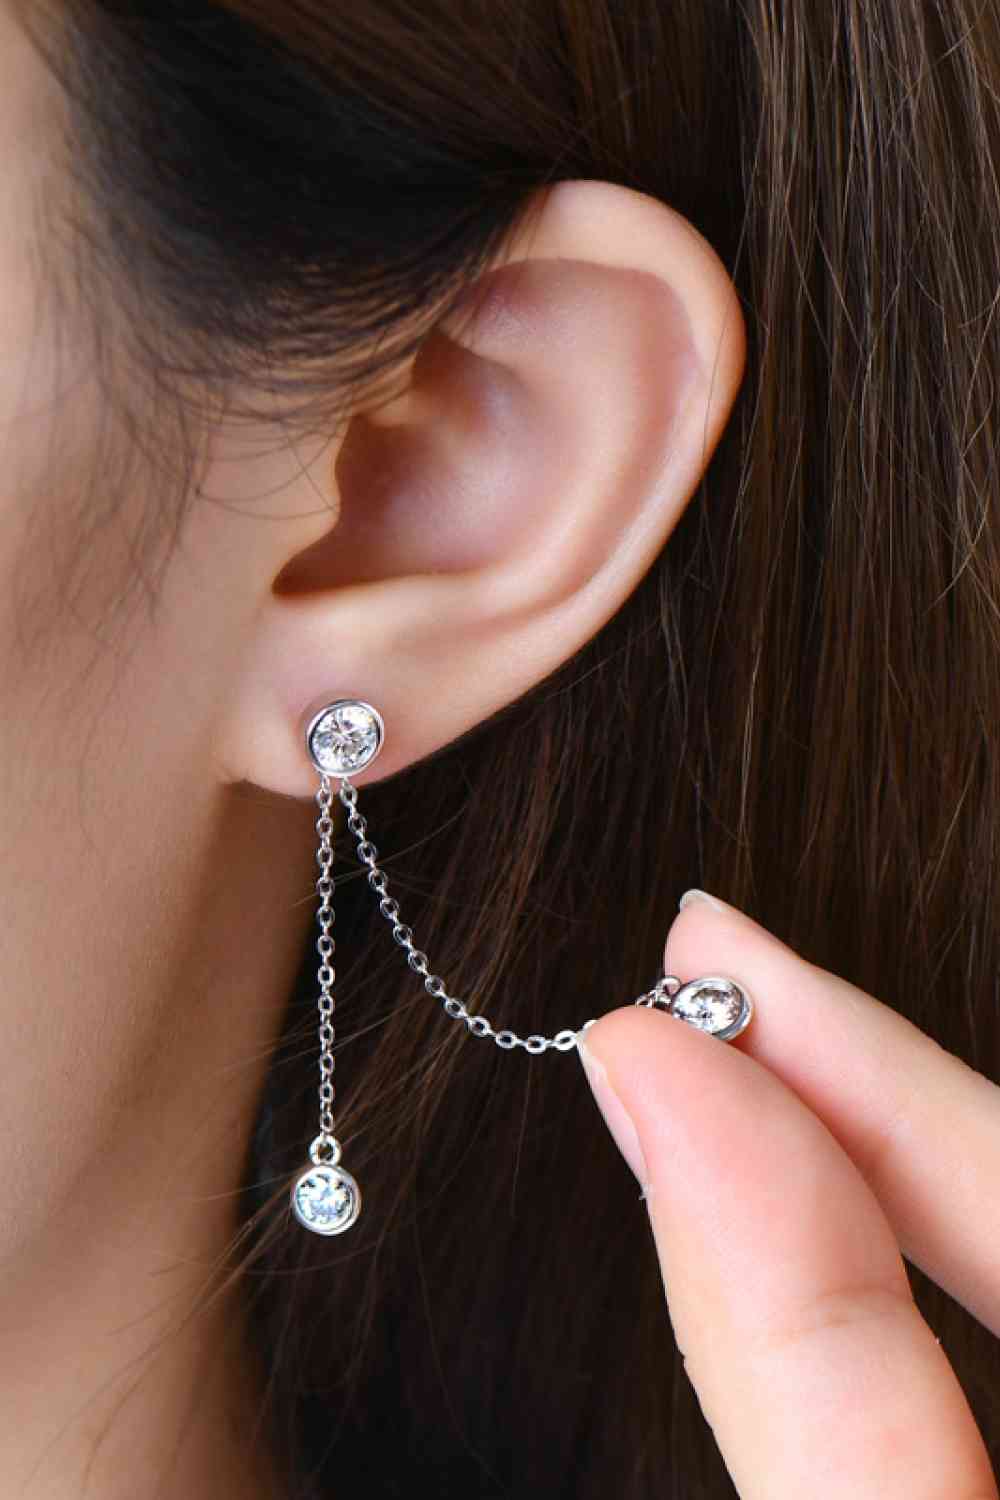 a woman wearing a silver chain earring